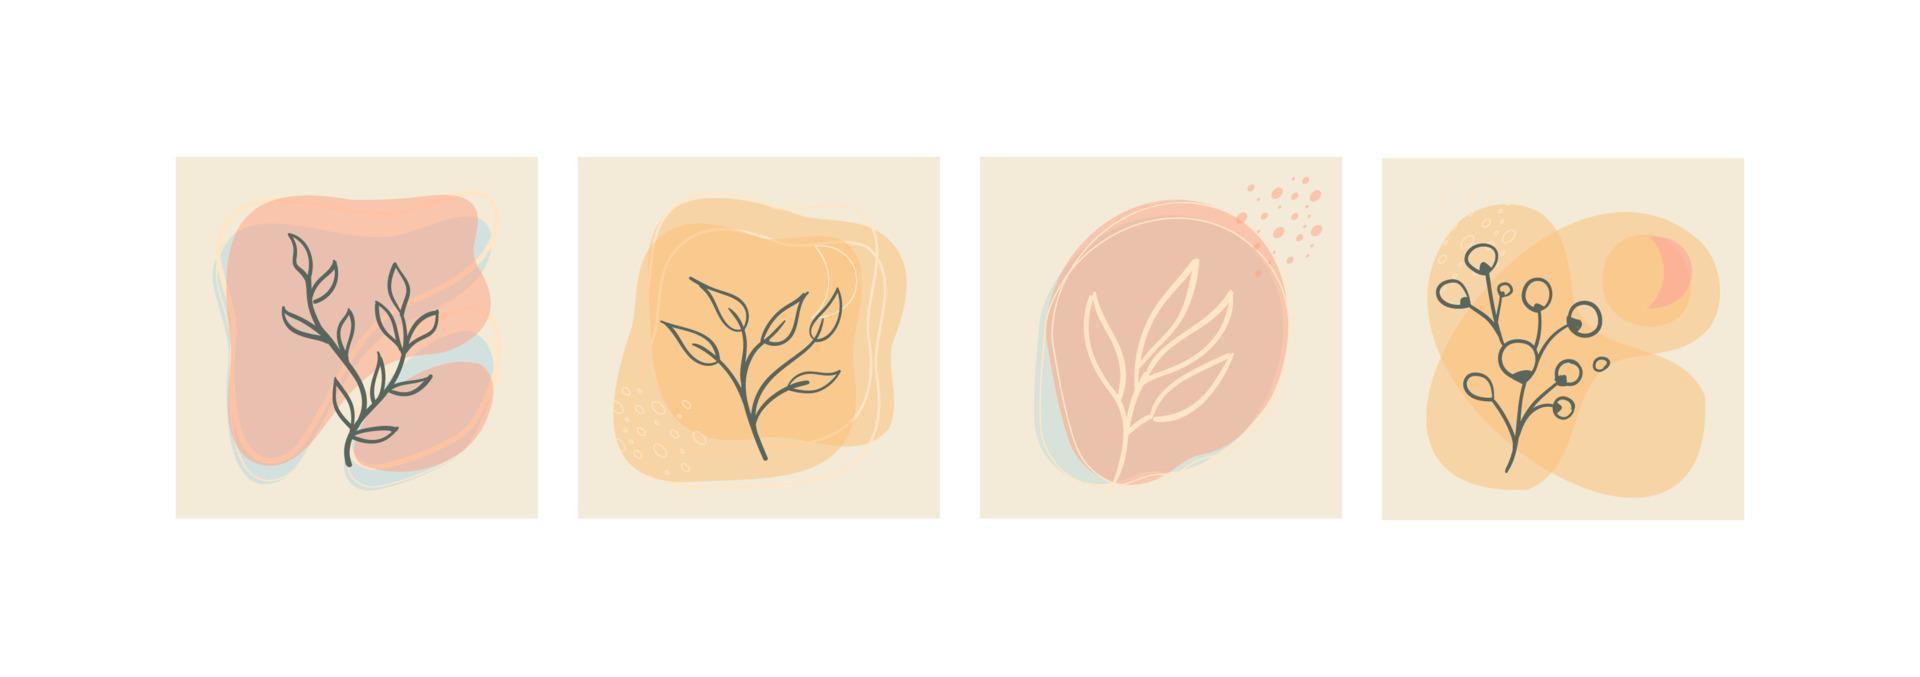 fondo de planta de naturaleza estética con formas orgánicas abstractas en paleta de colores pastel. vector